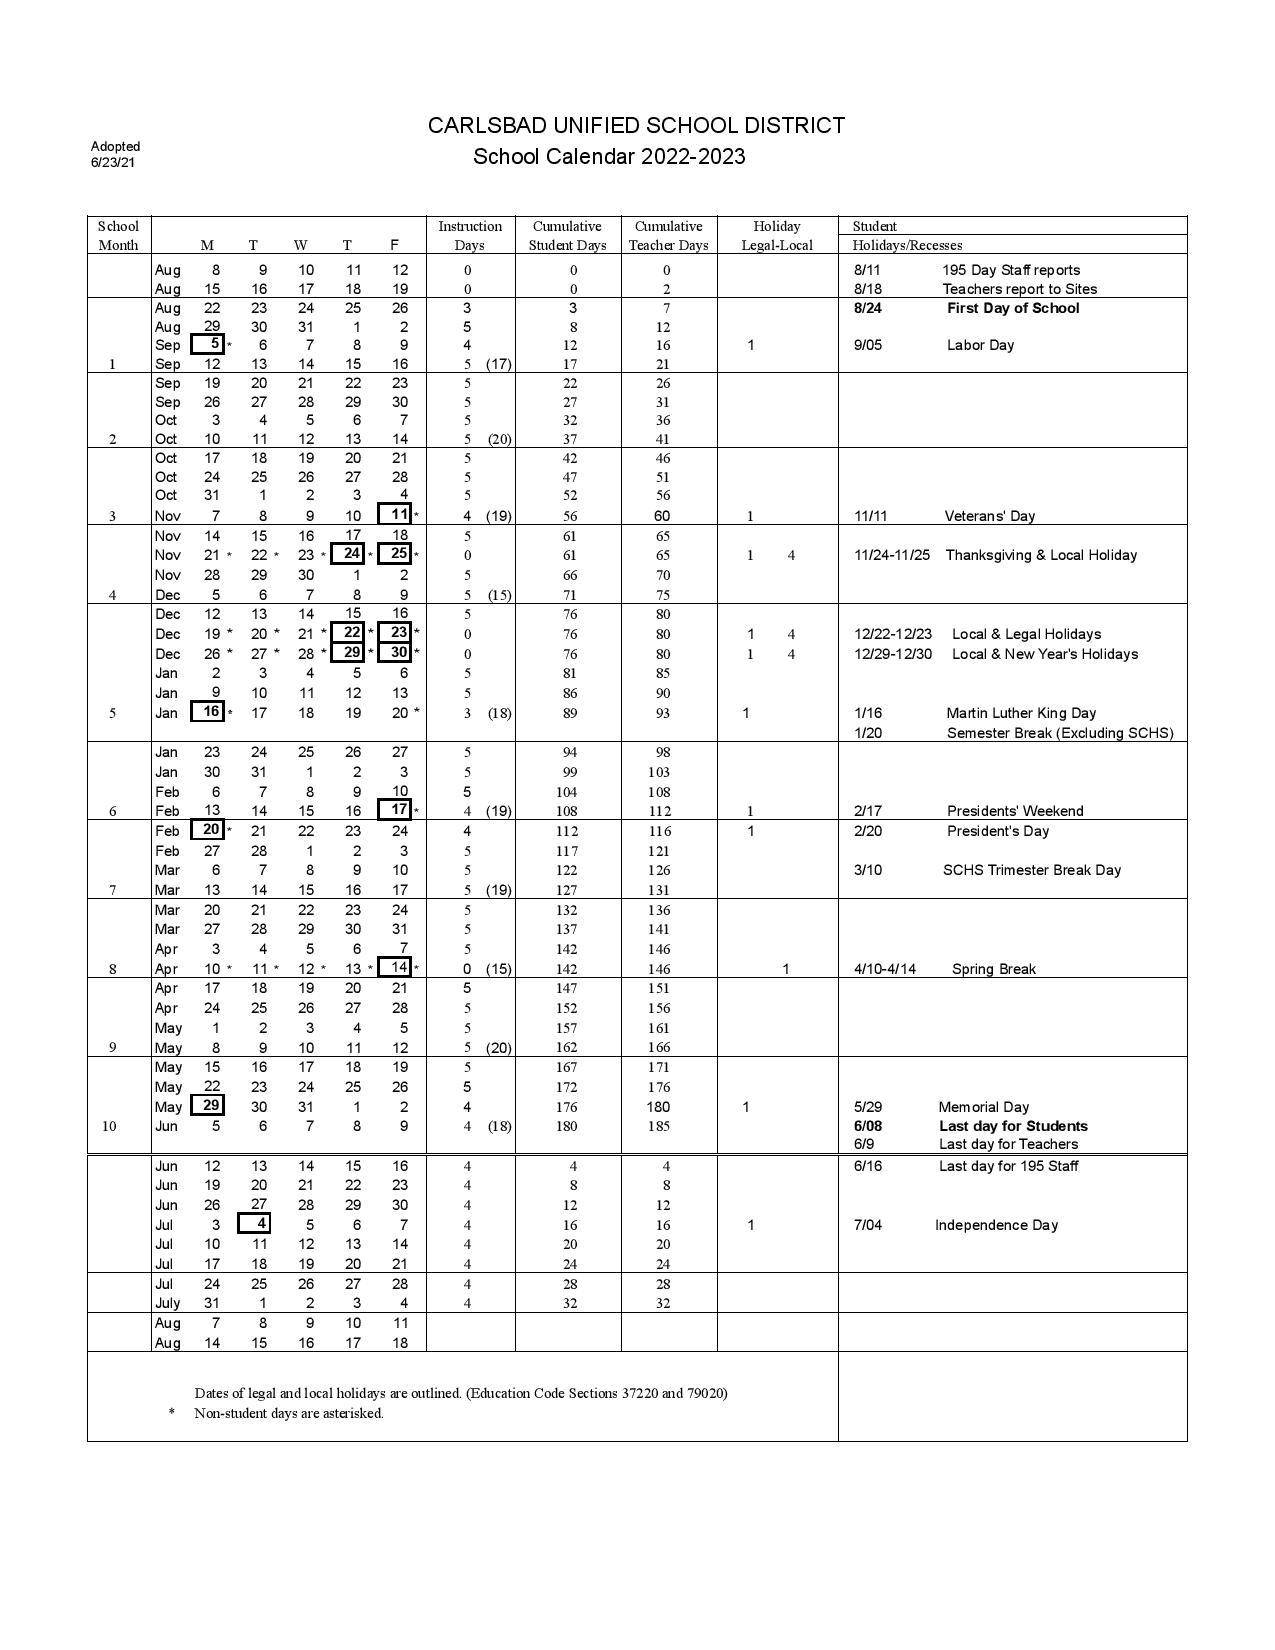 carlsbad-unified-school-district-calendar-2022-2023